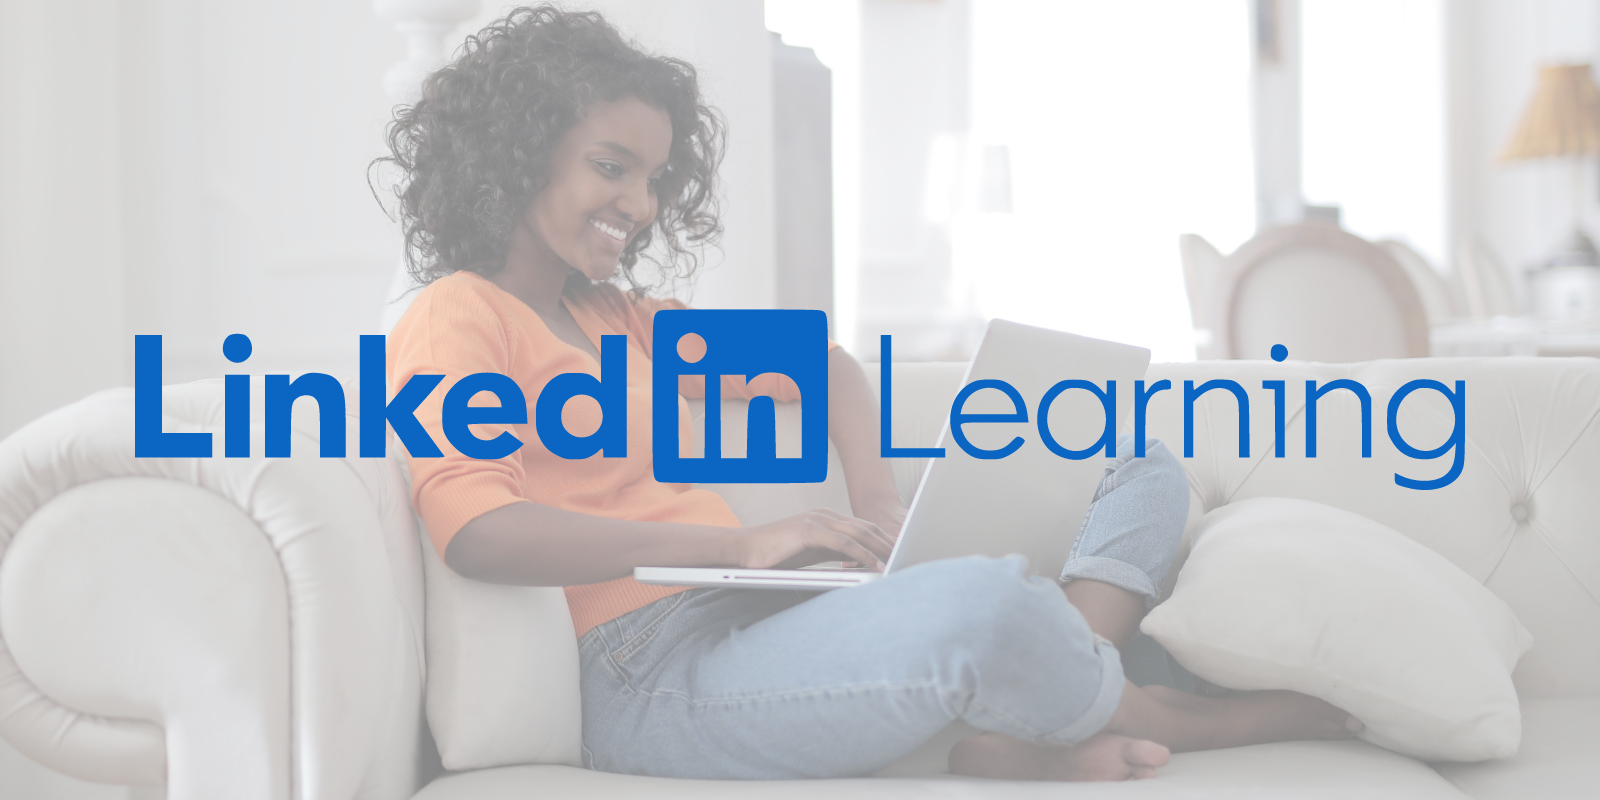 Secure Coding in C Online Class  LinkedIn Learning, formerly Lynda.com